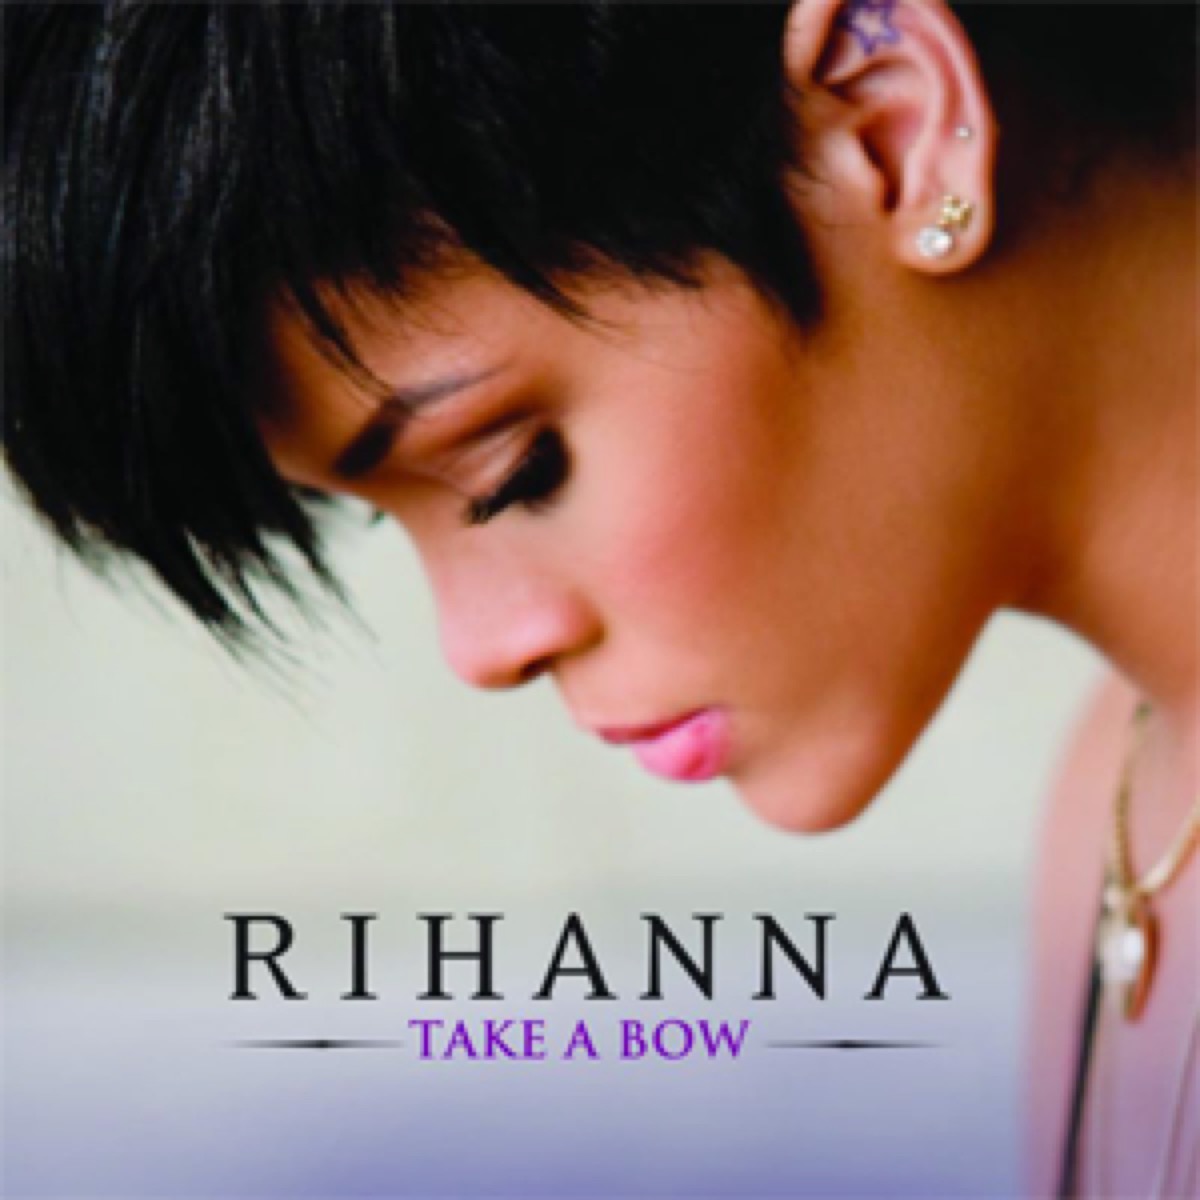 rihanna take a bow cover art, breakup songs